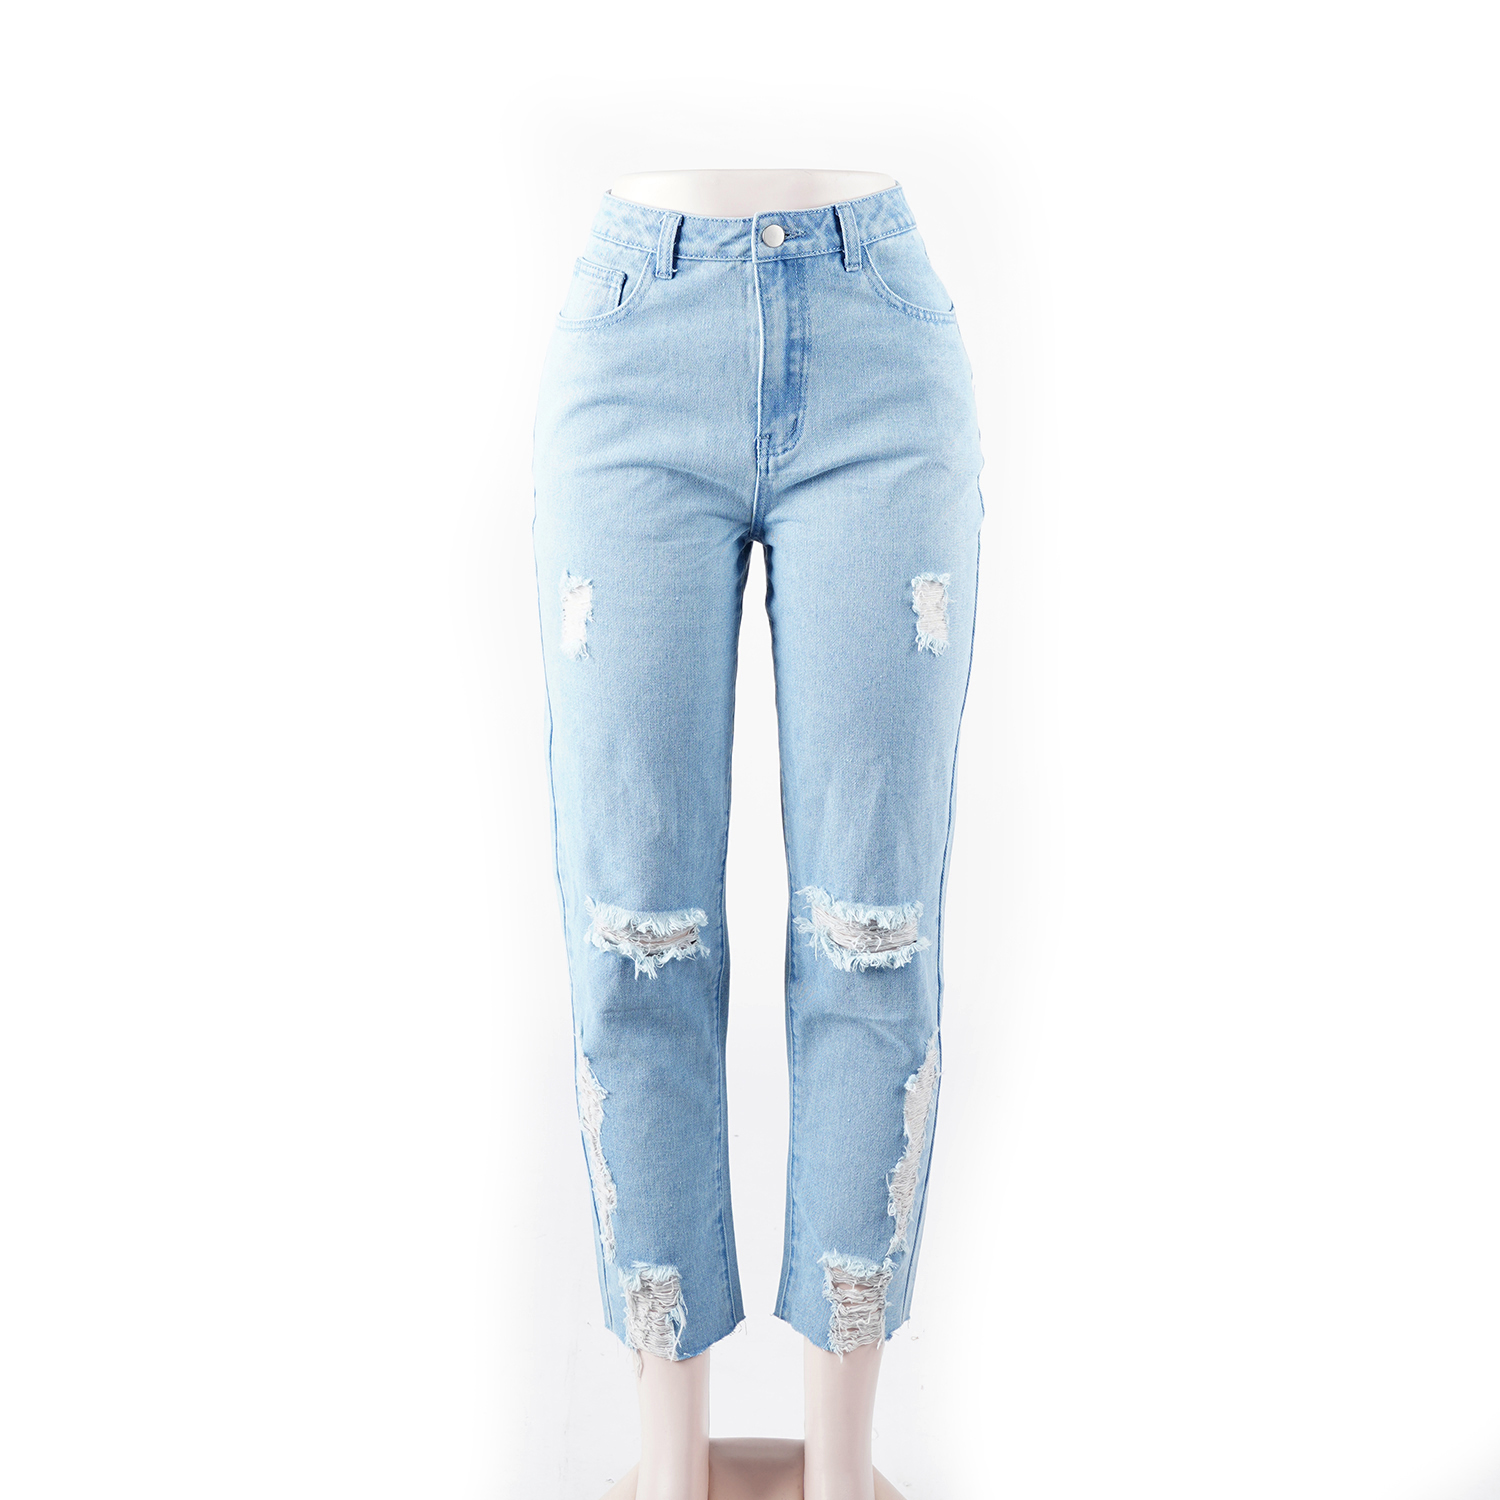 SKYKINGDOM 2020 fashion design women jeans regular blue trousers ripped hollow out denim jeans for women